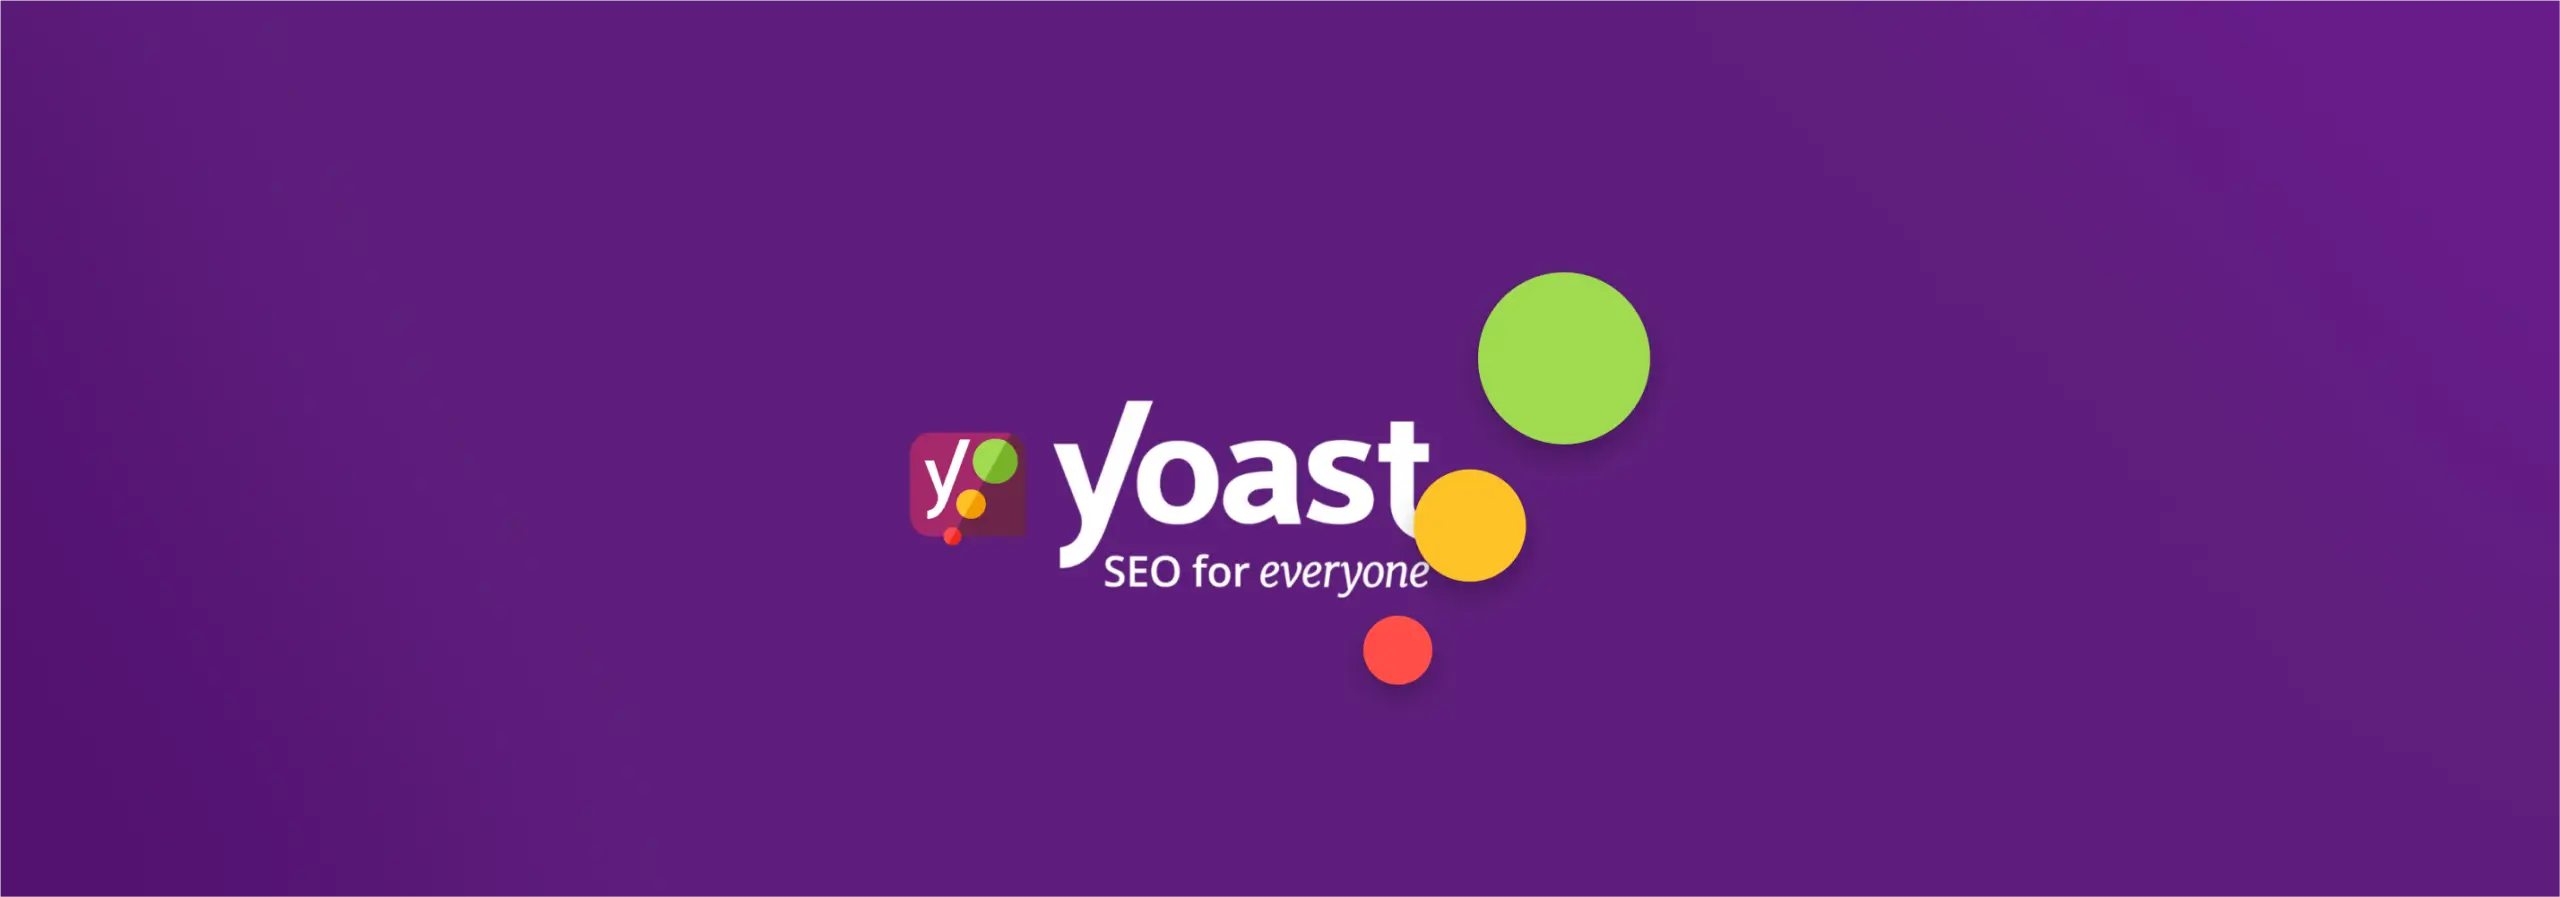 yoast banner scaled